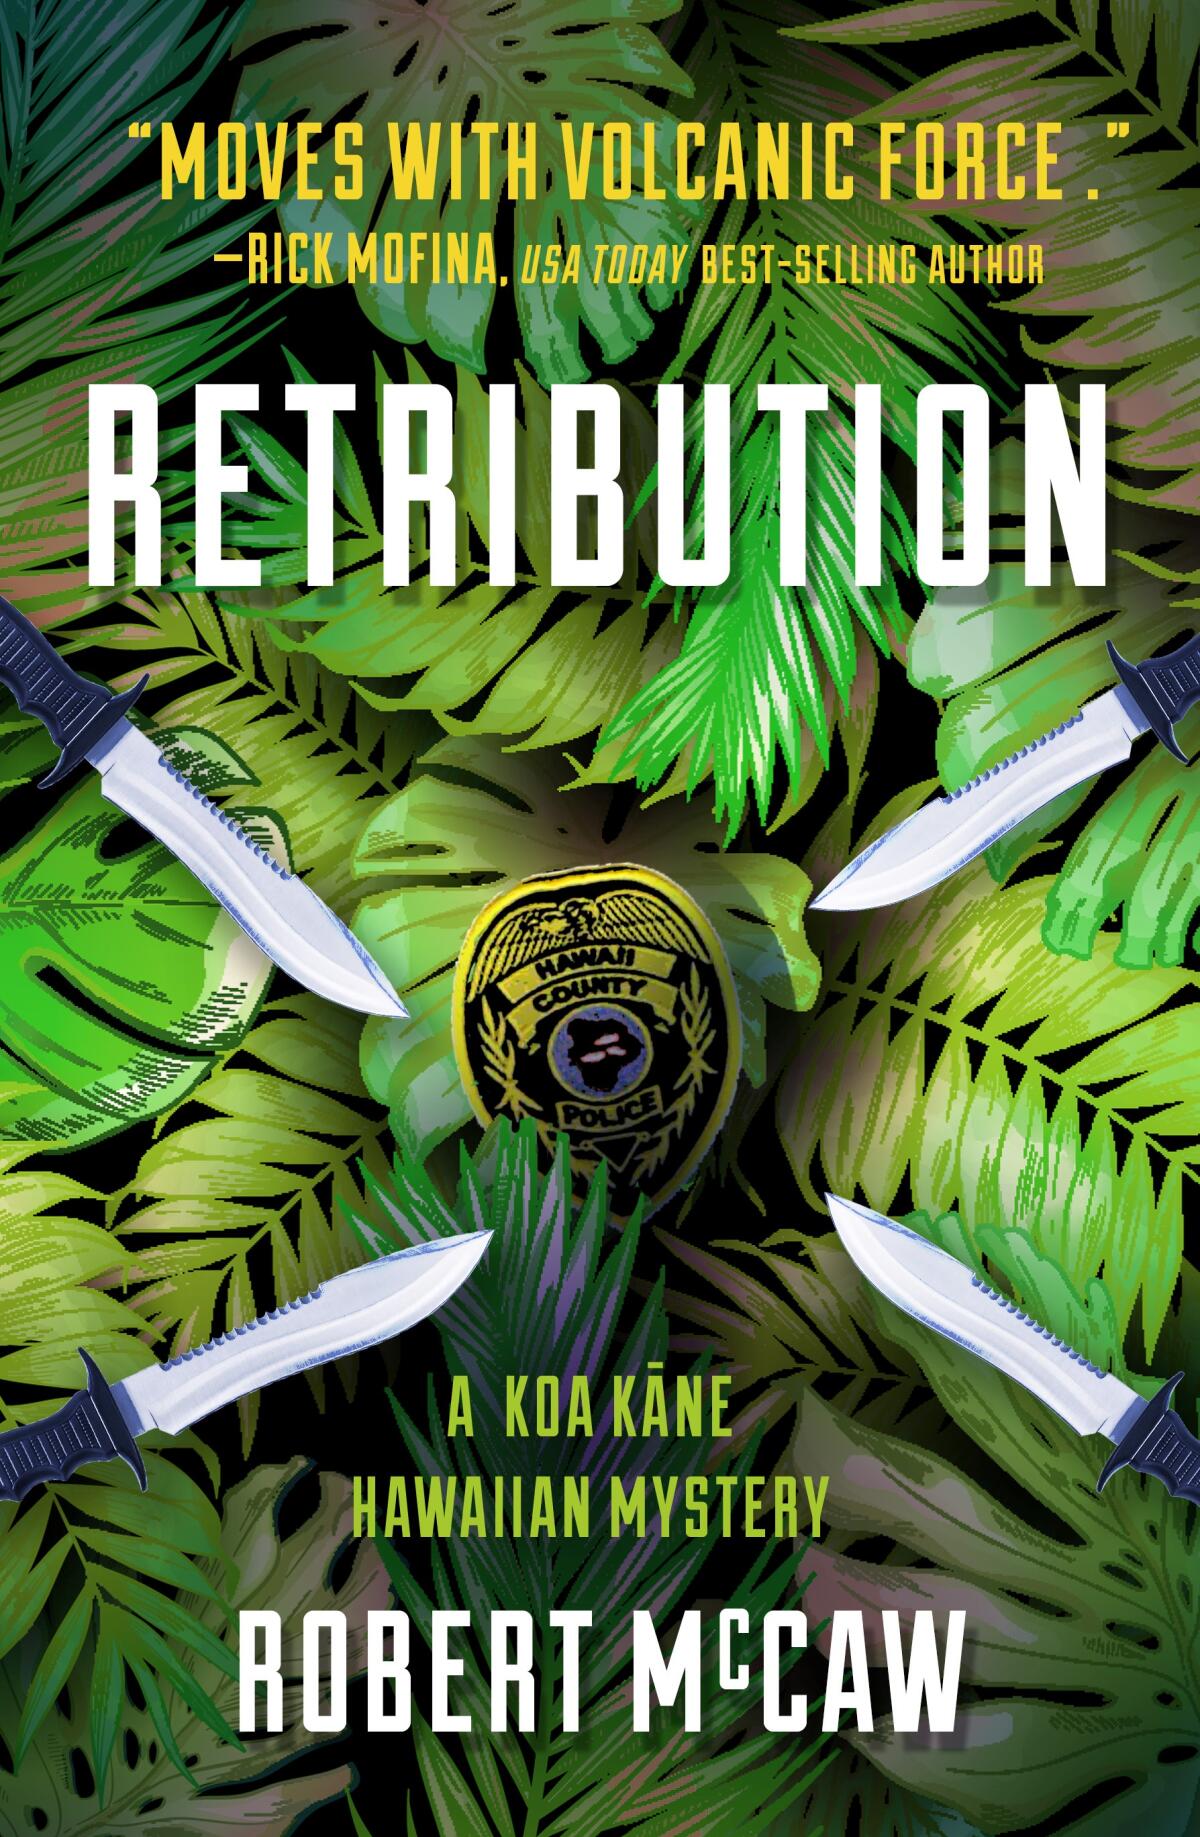 "Retribution" is the fifth book in La Jollan Robert McCaw's series of mysteries set in Hawaii.